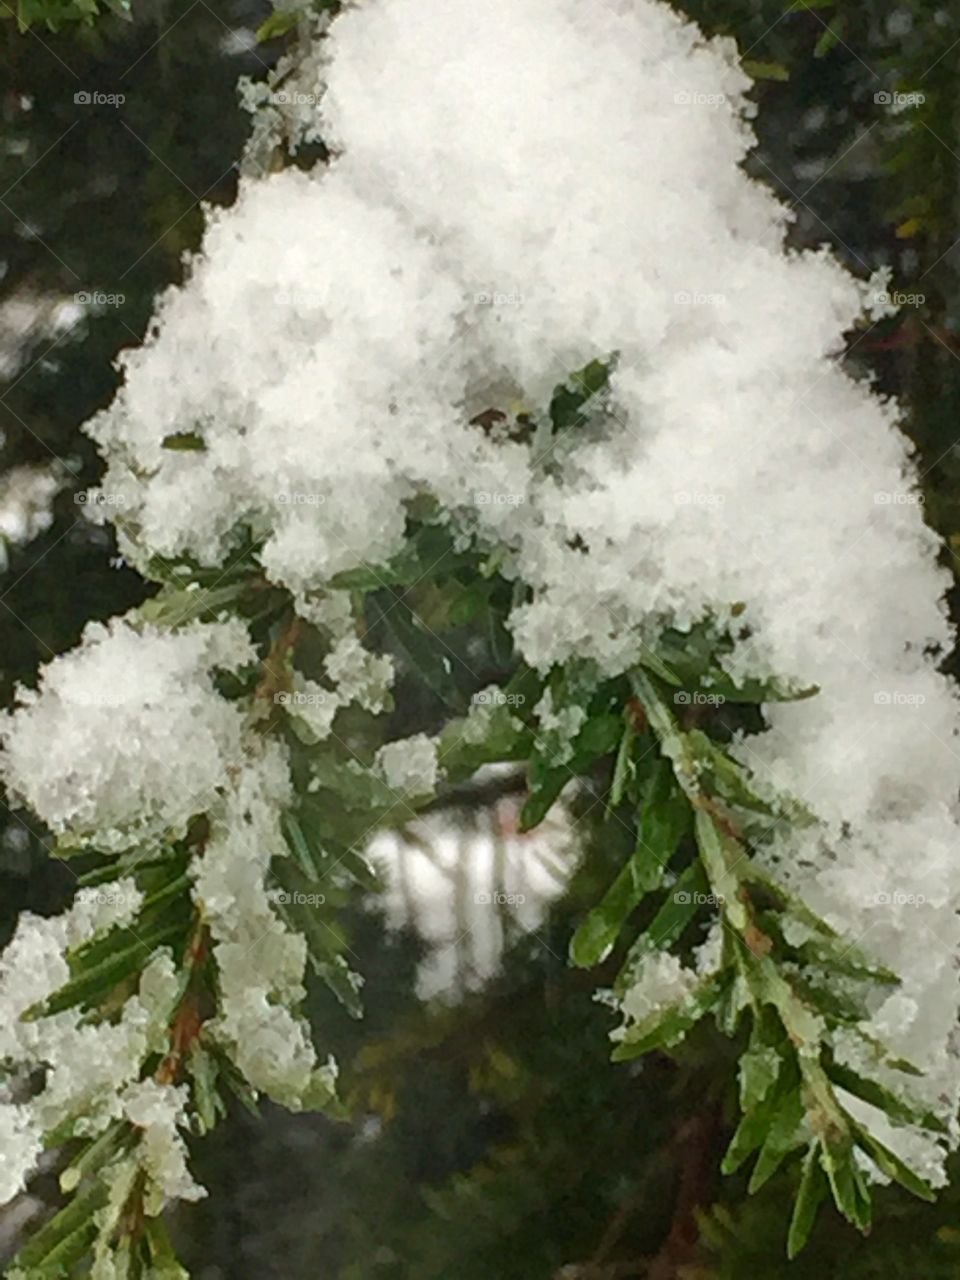 Icy pine tree